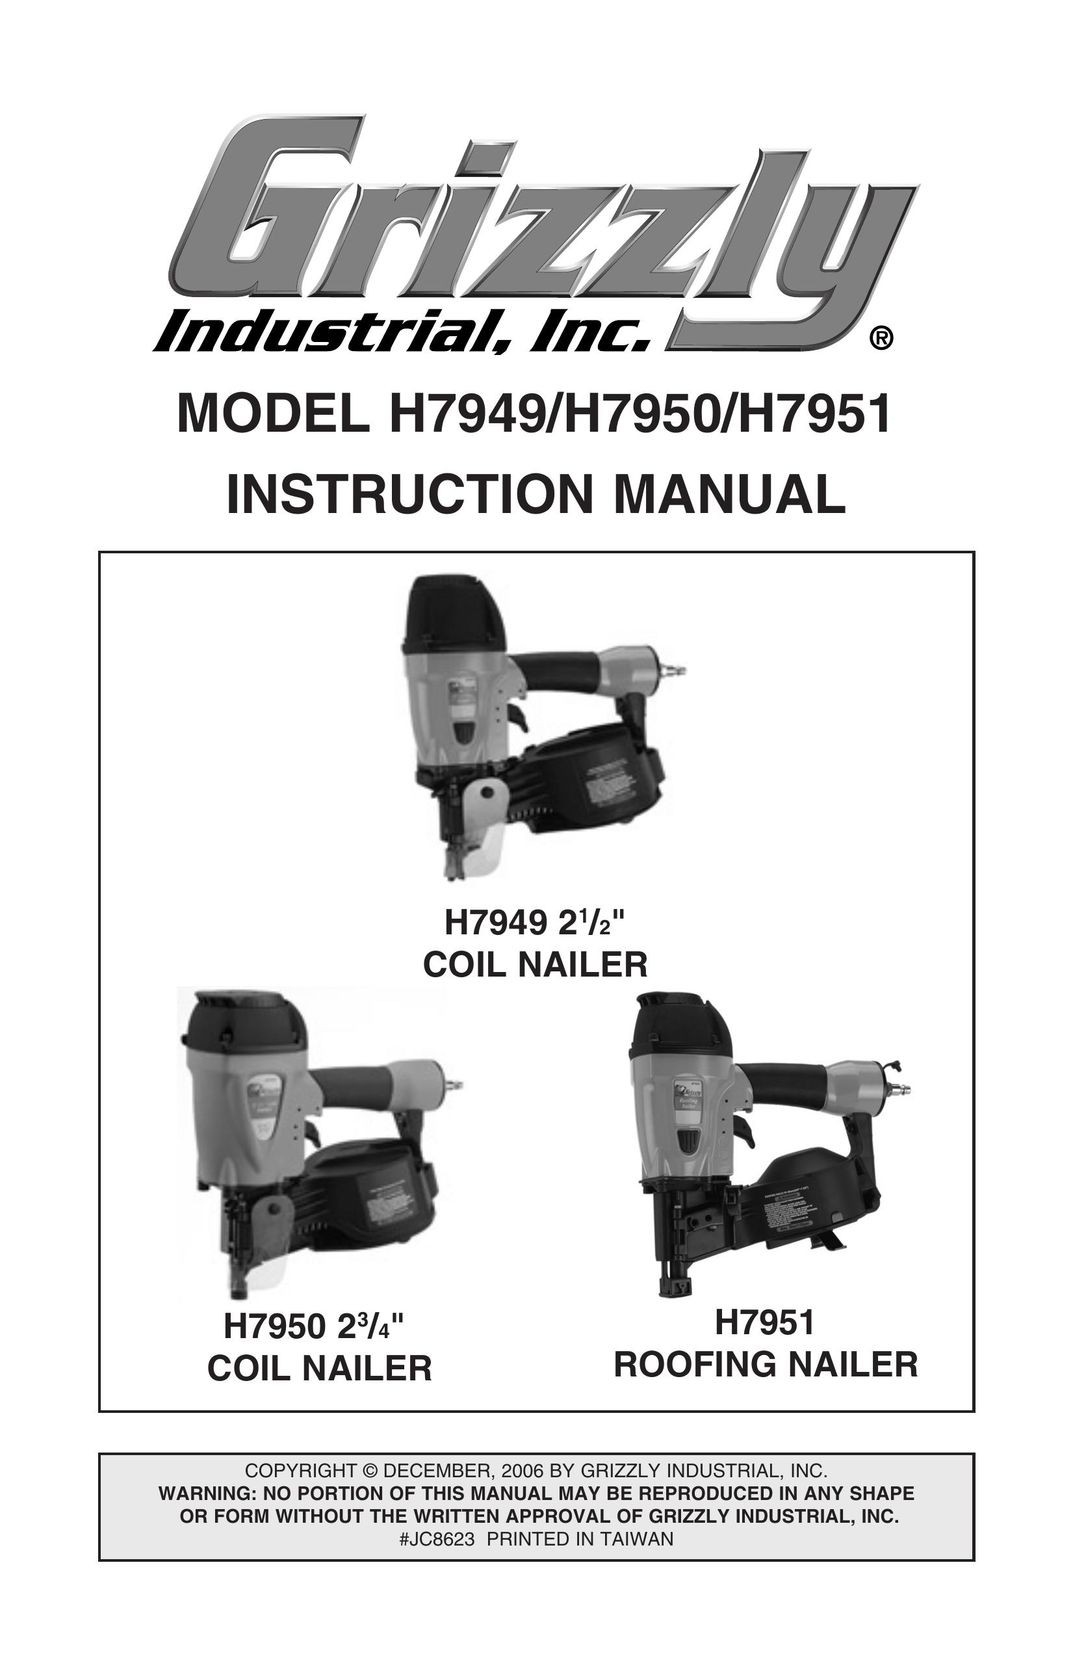 Grizzly H7949 Nail Gun User Manual